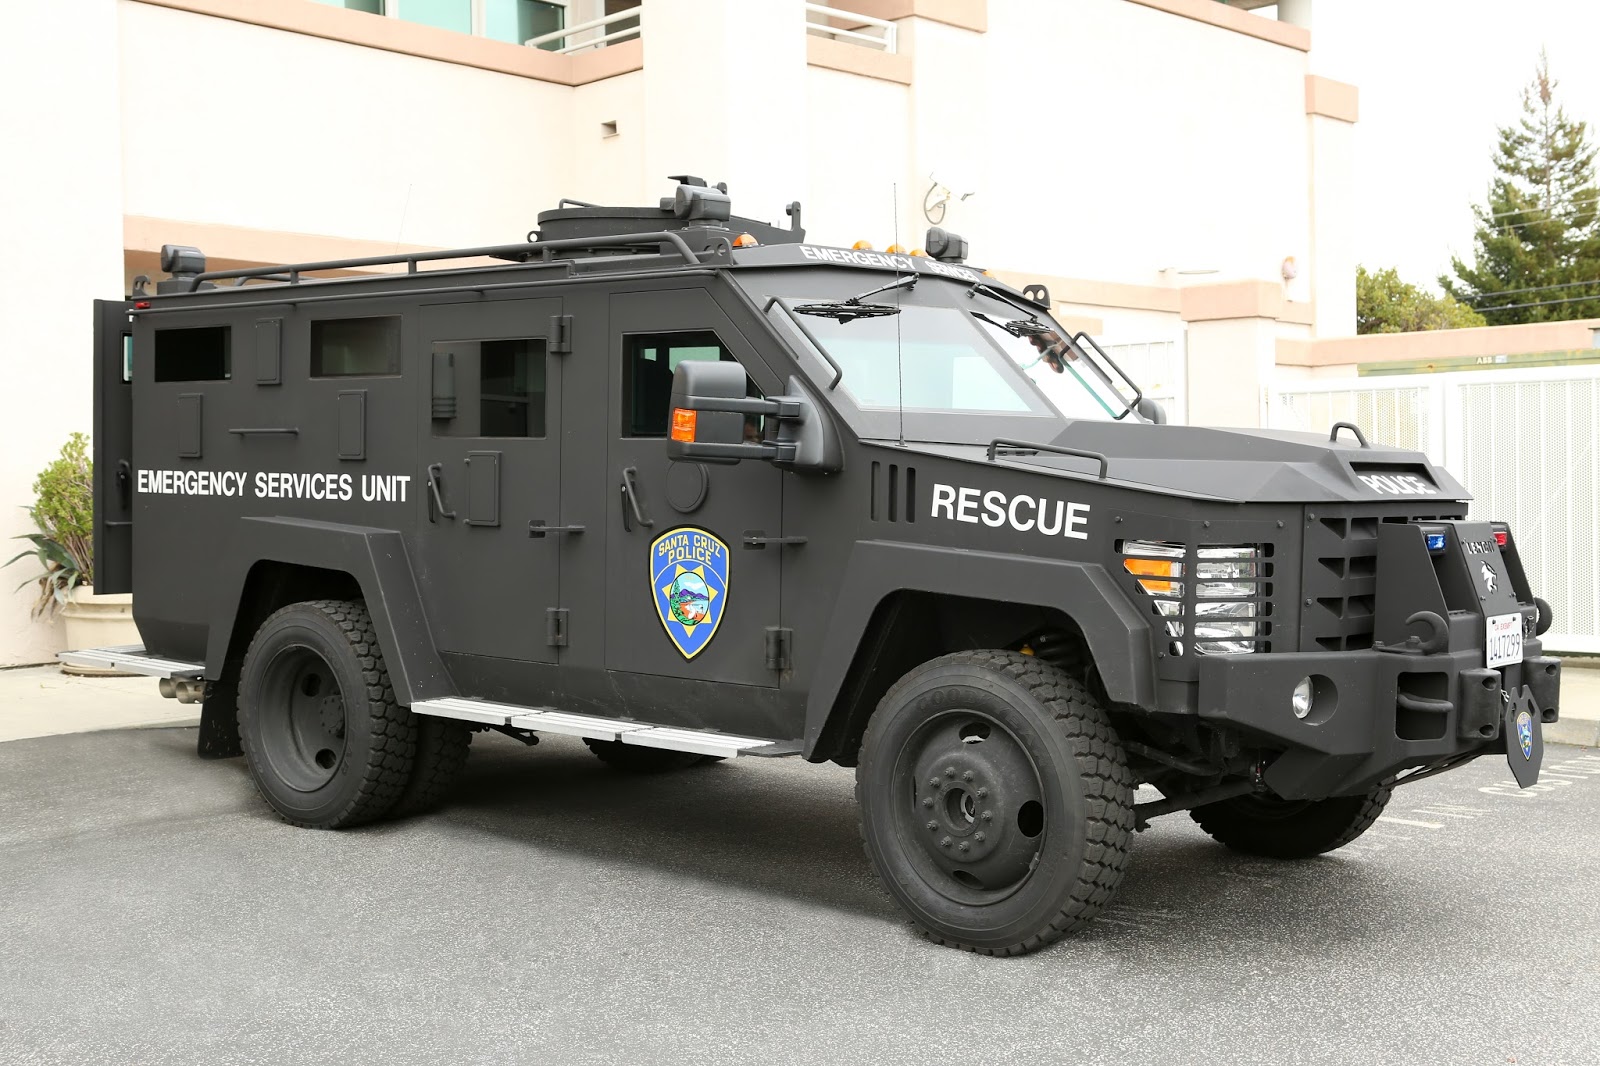 Santa Cruz Police: Local Media Gets Showroom Visit with SCPD BearCat